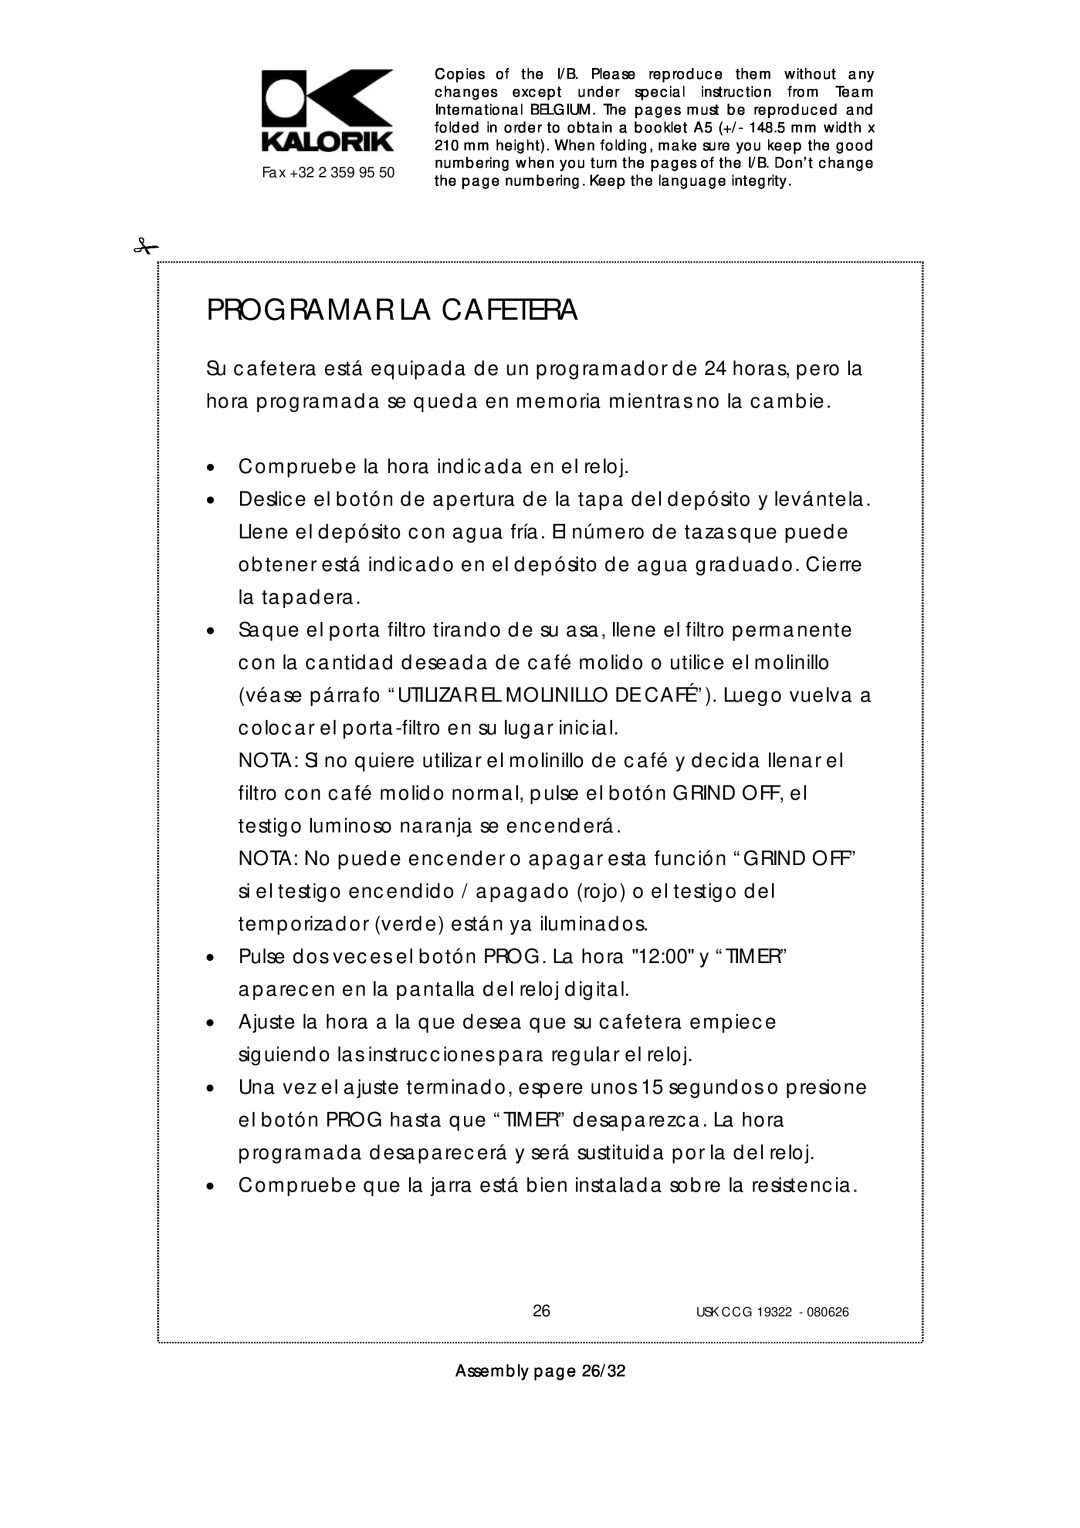 Kalorik USK CCG080626, USK CCG 19322 manual Programar La Cafetera 